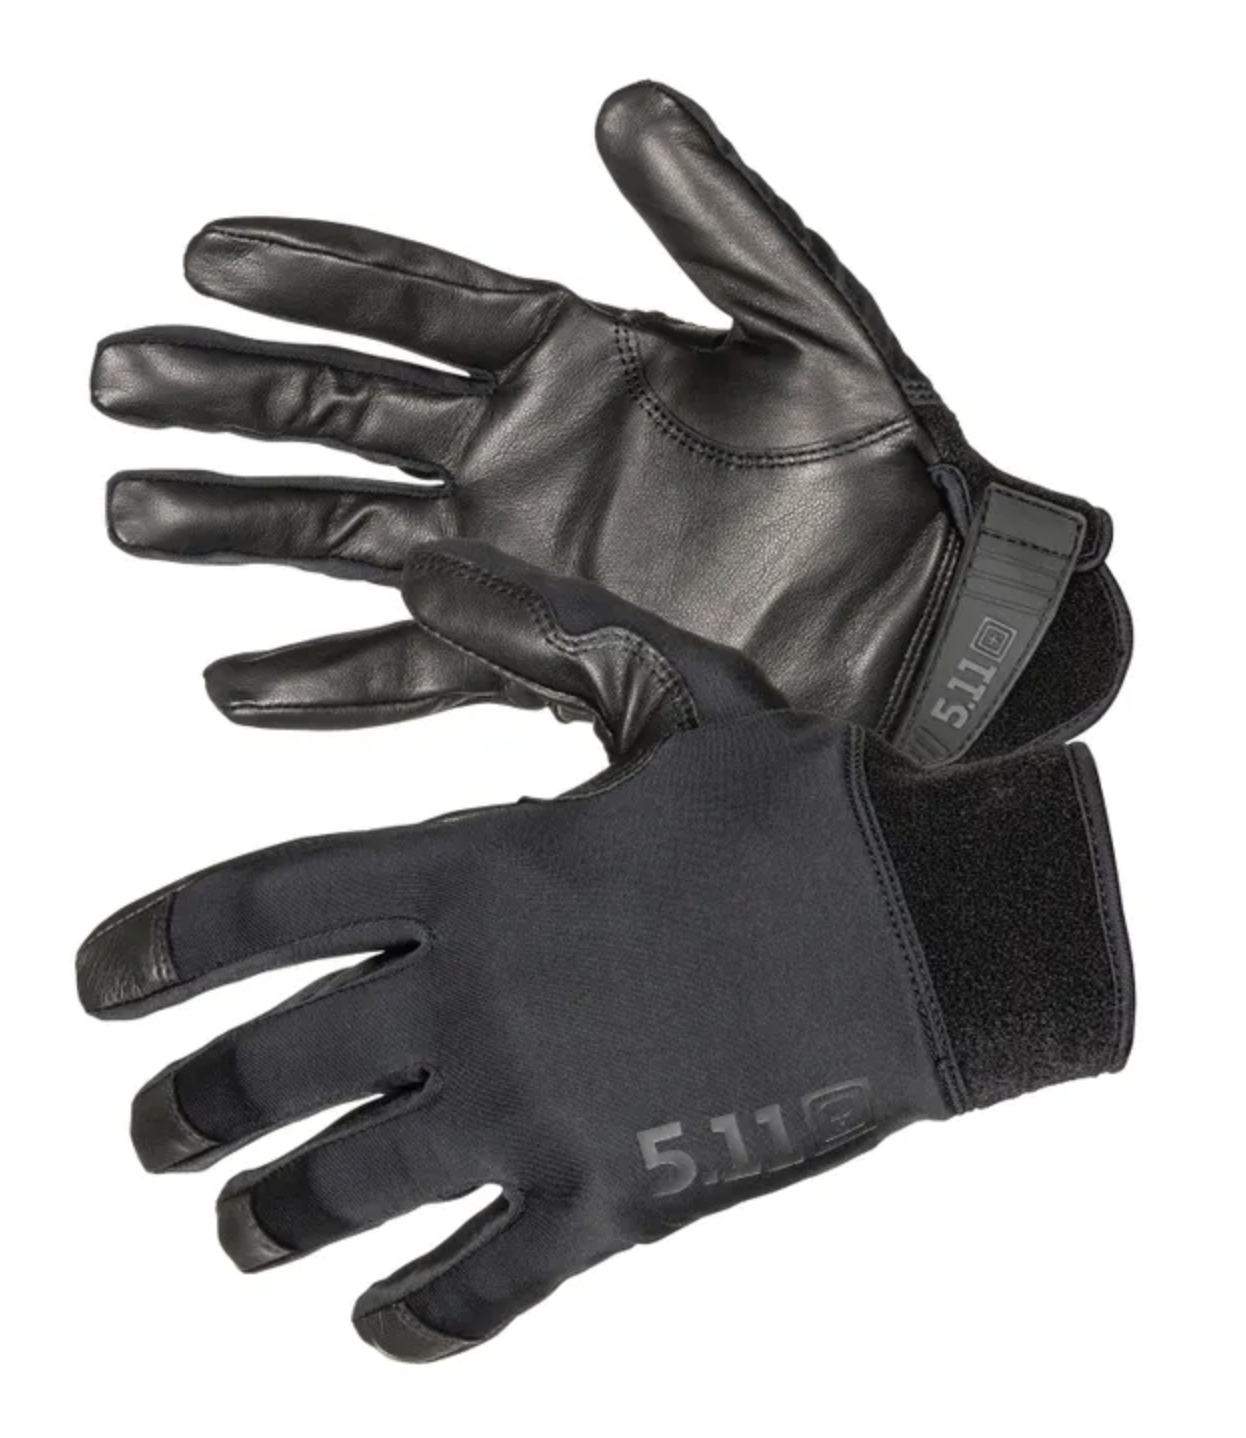 5.11 - Taclite 3 Glove - Black (019)